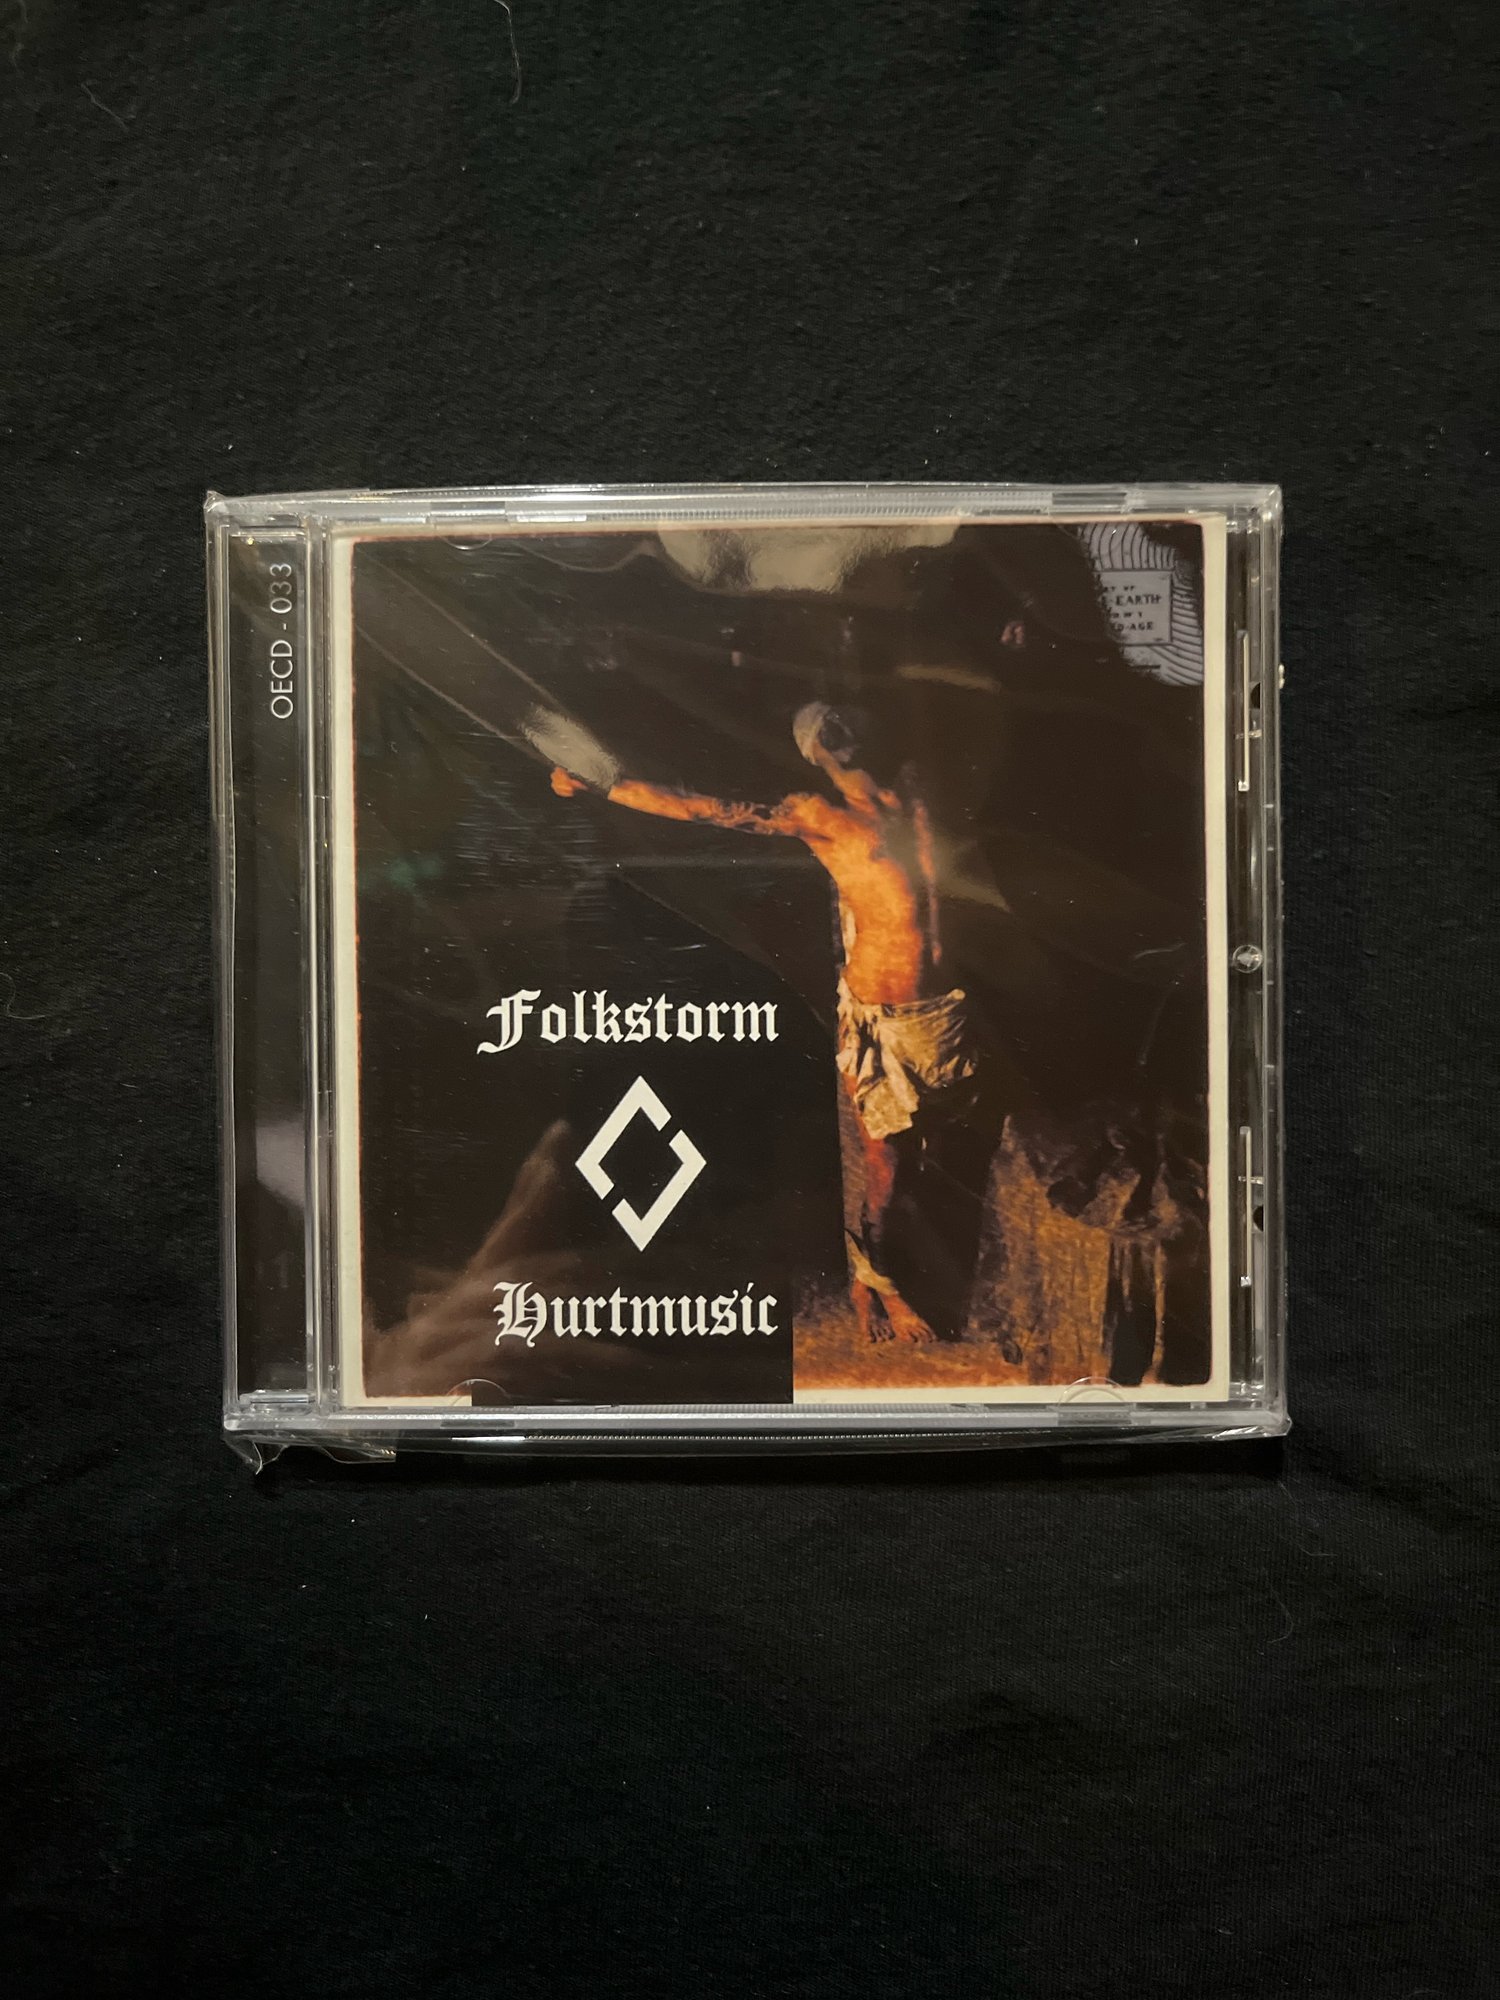 Folkstorm - Hurtmusic CD (OEC)